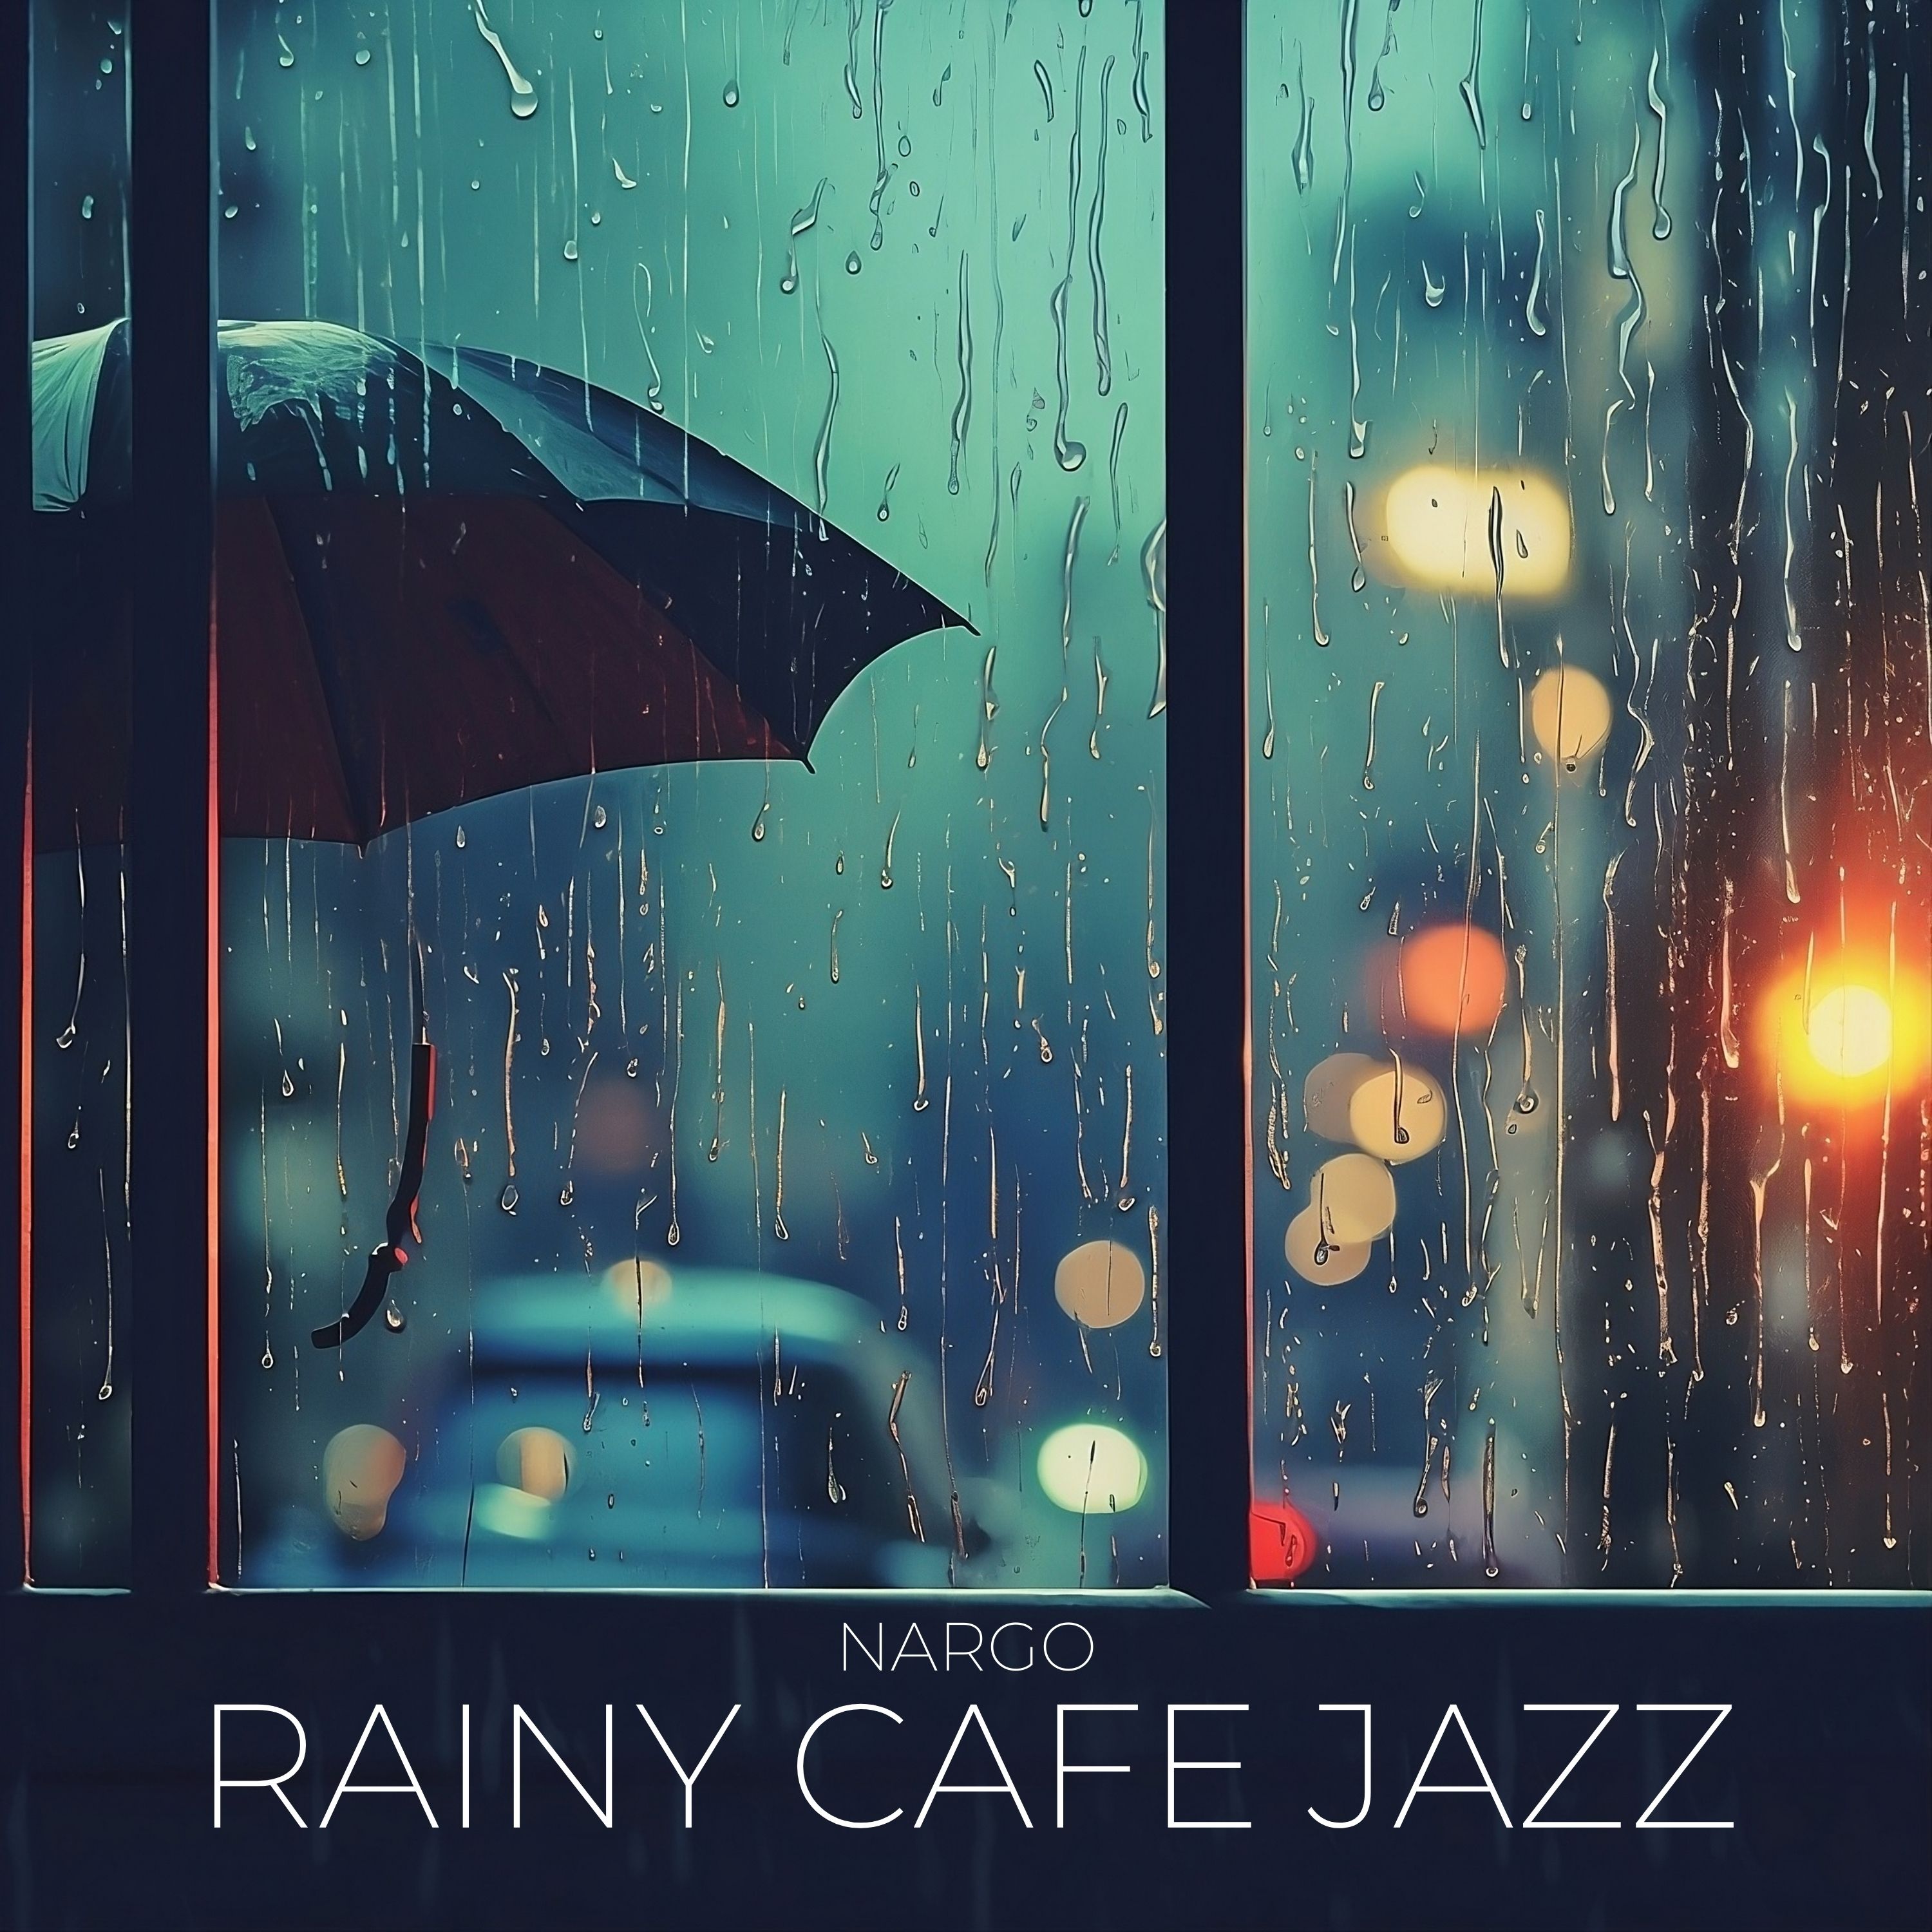 Rainy Cafe Jazz